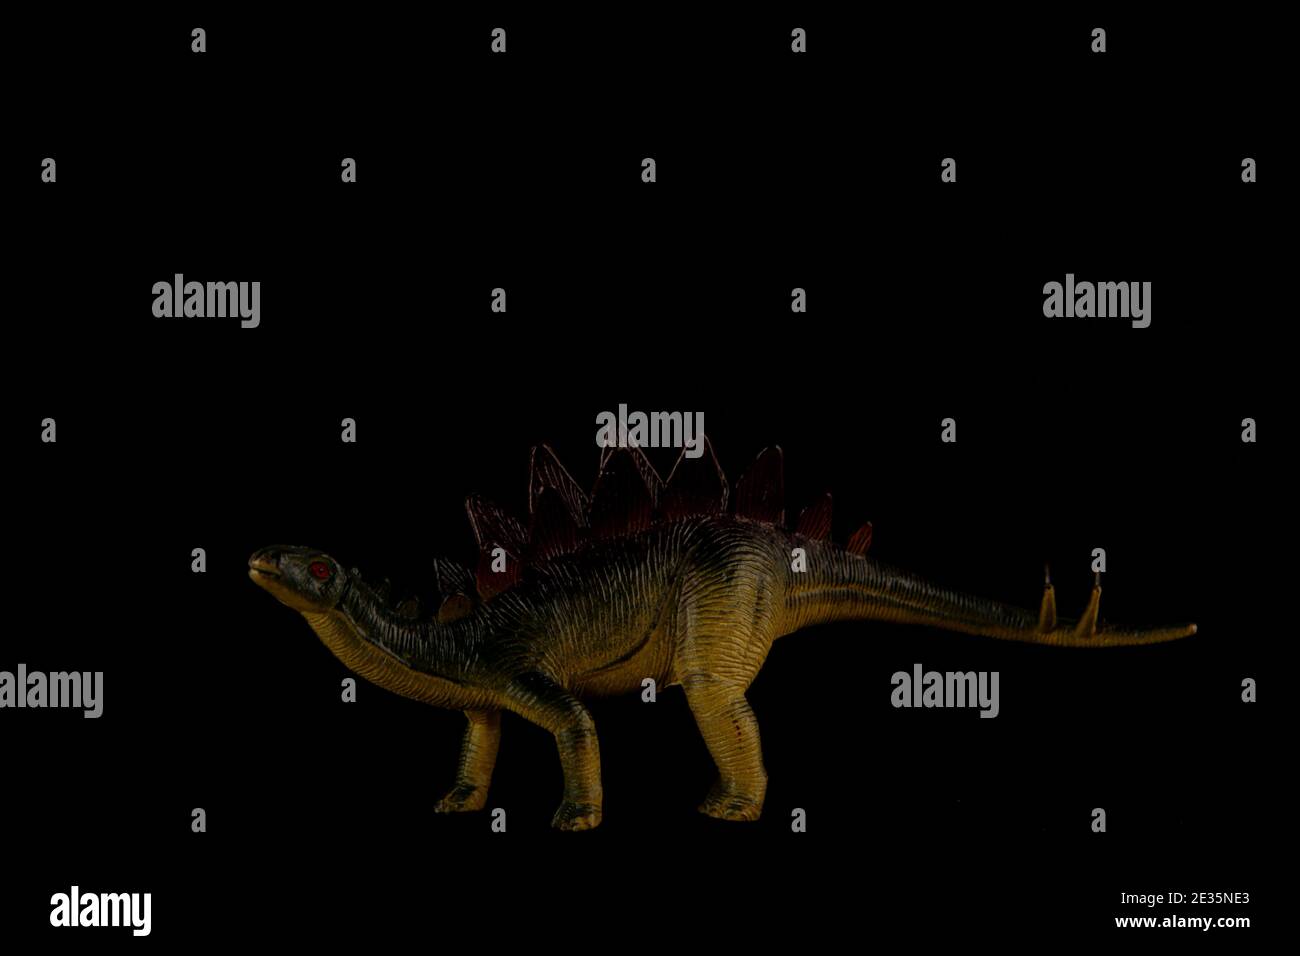 portrait of stegosaur - extinct dinosaur - isolated on black background. Image contains copy space Stock Photo